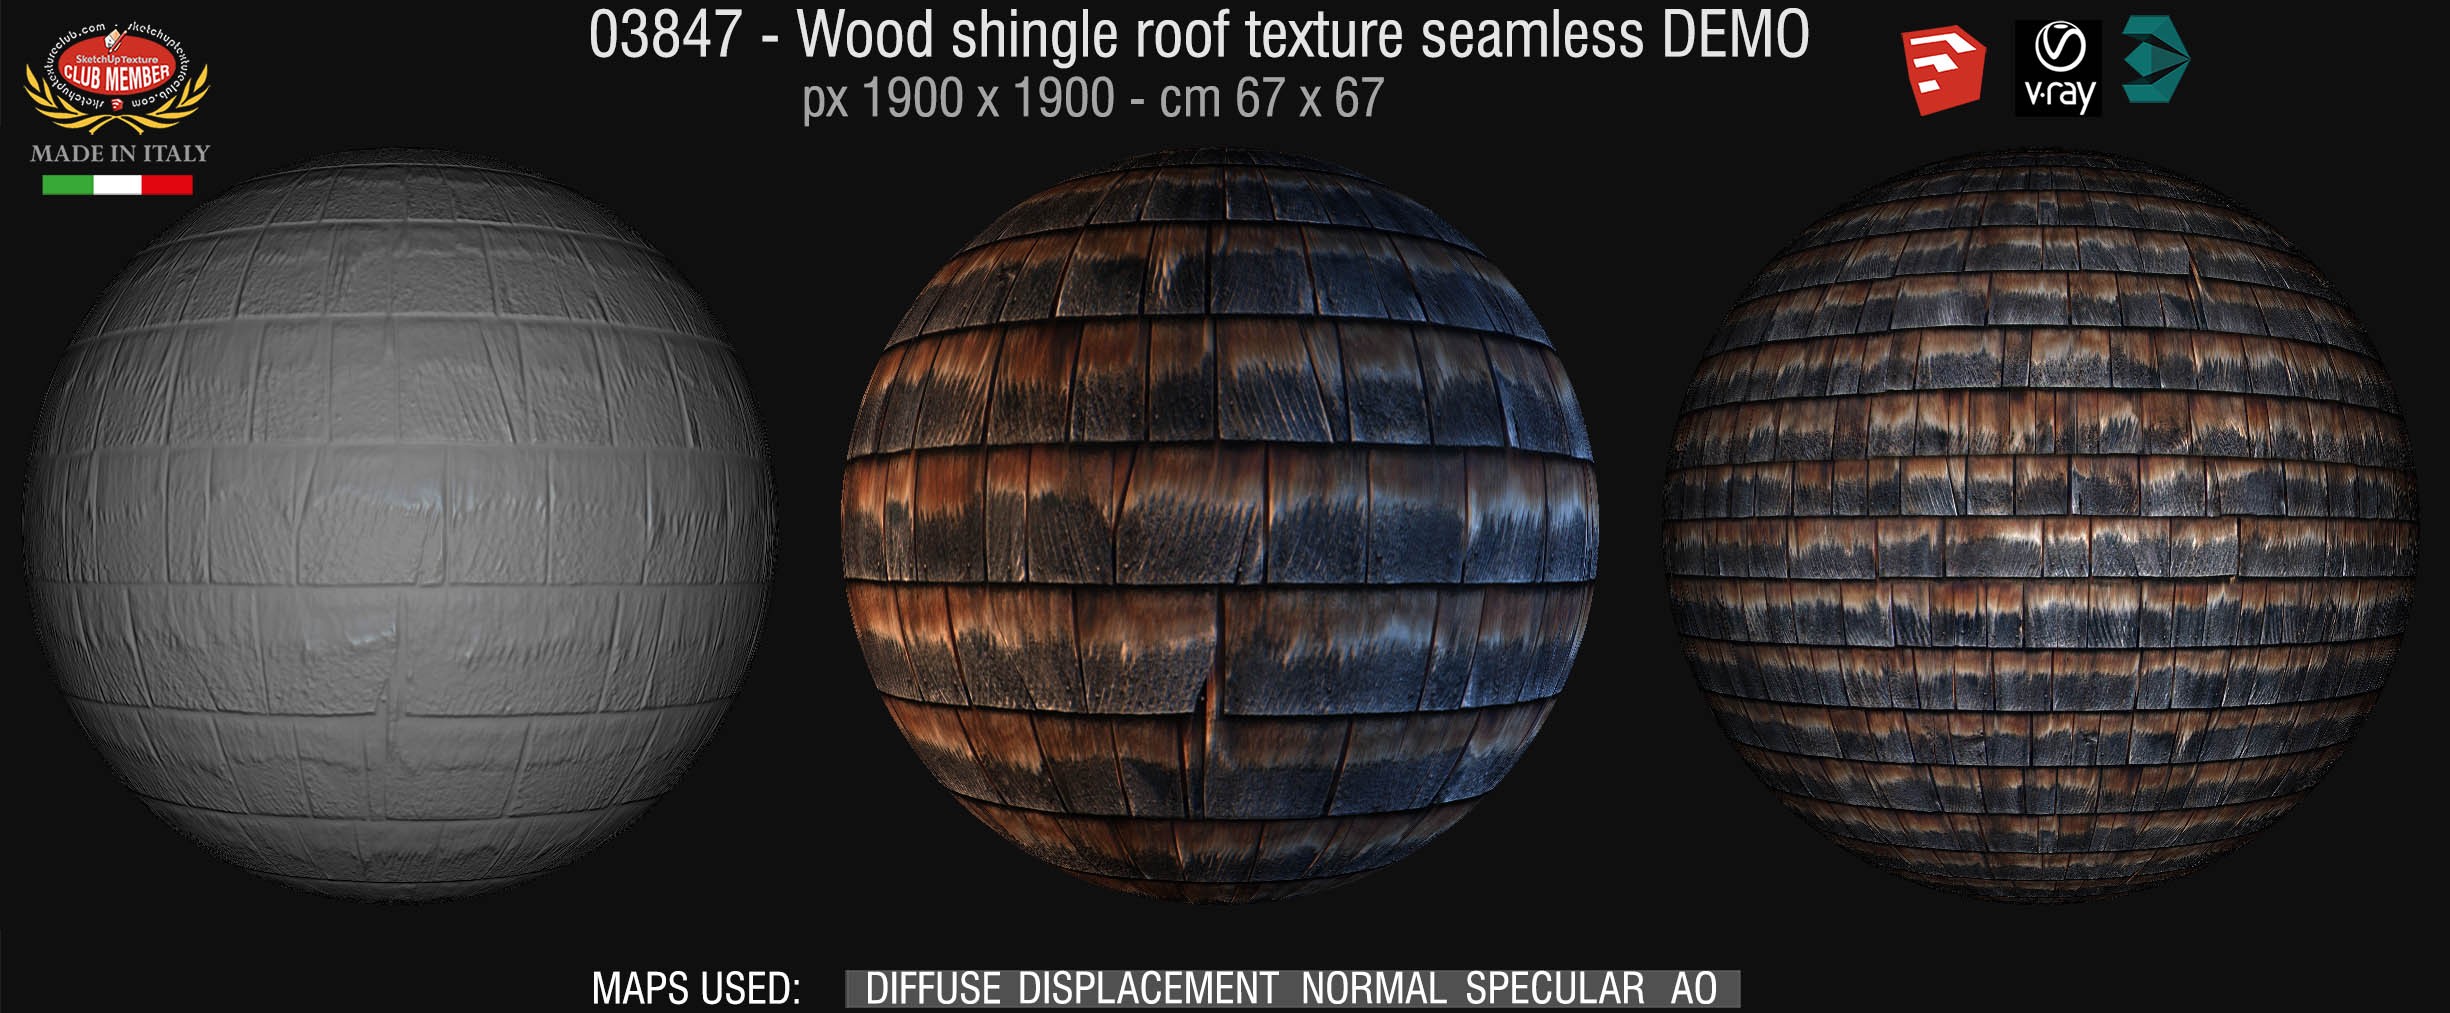 03847 Wood shingle roof texture seamless + maps DEMO